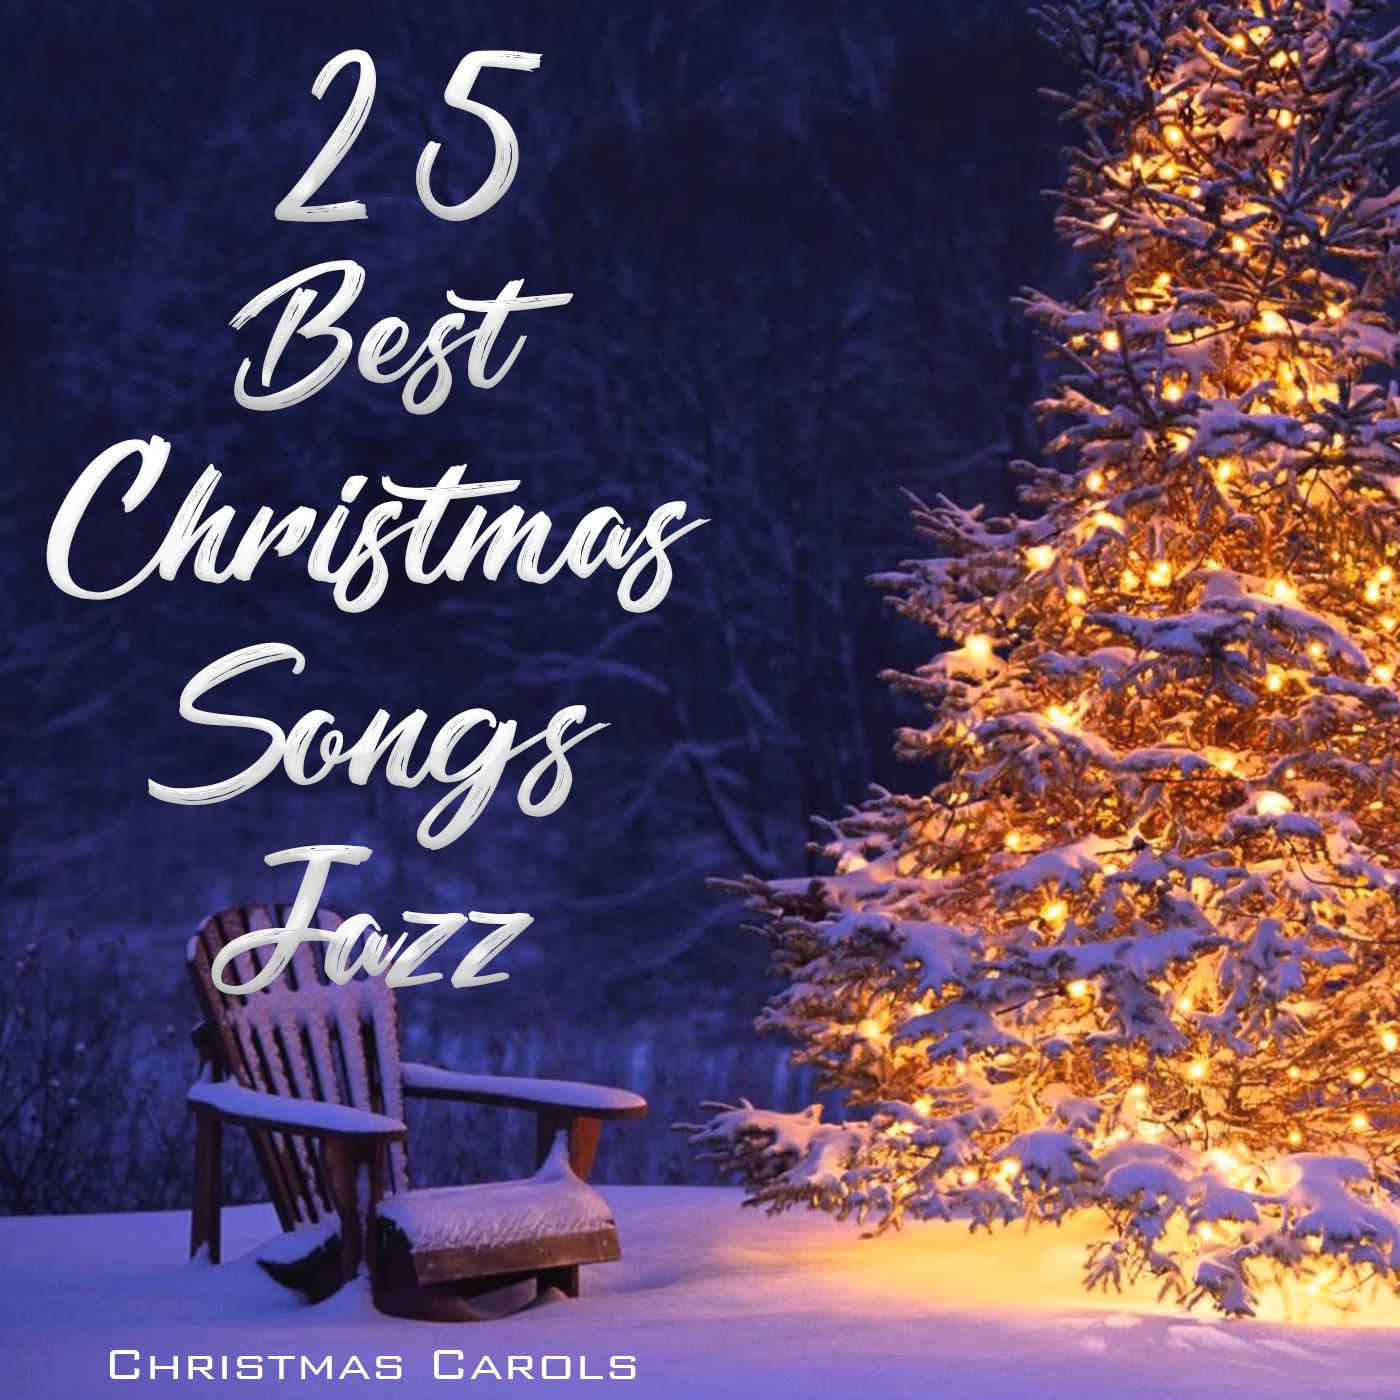 25 Best Christmas Songs Jazz